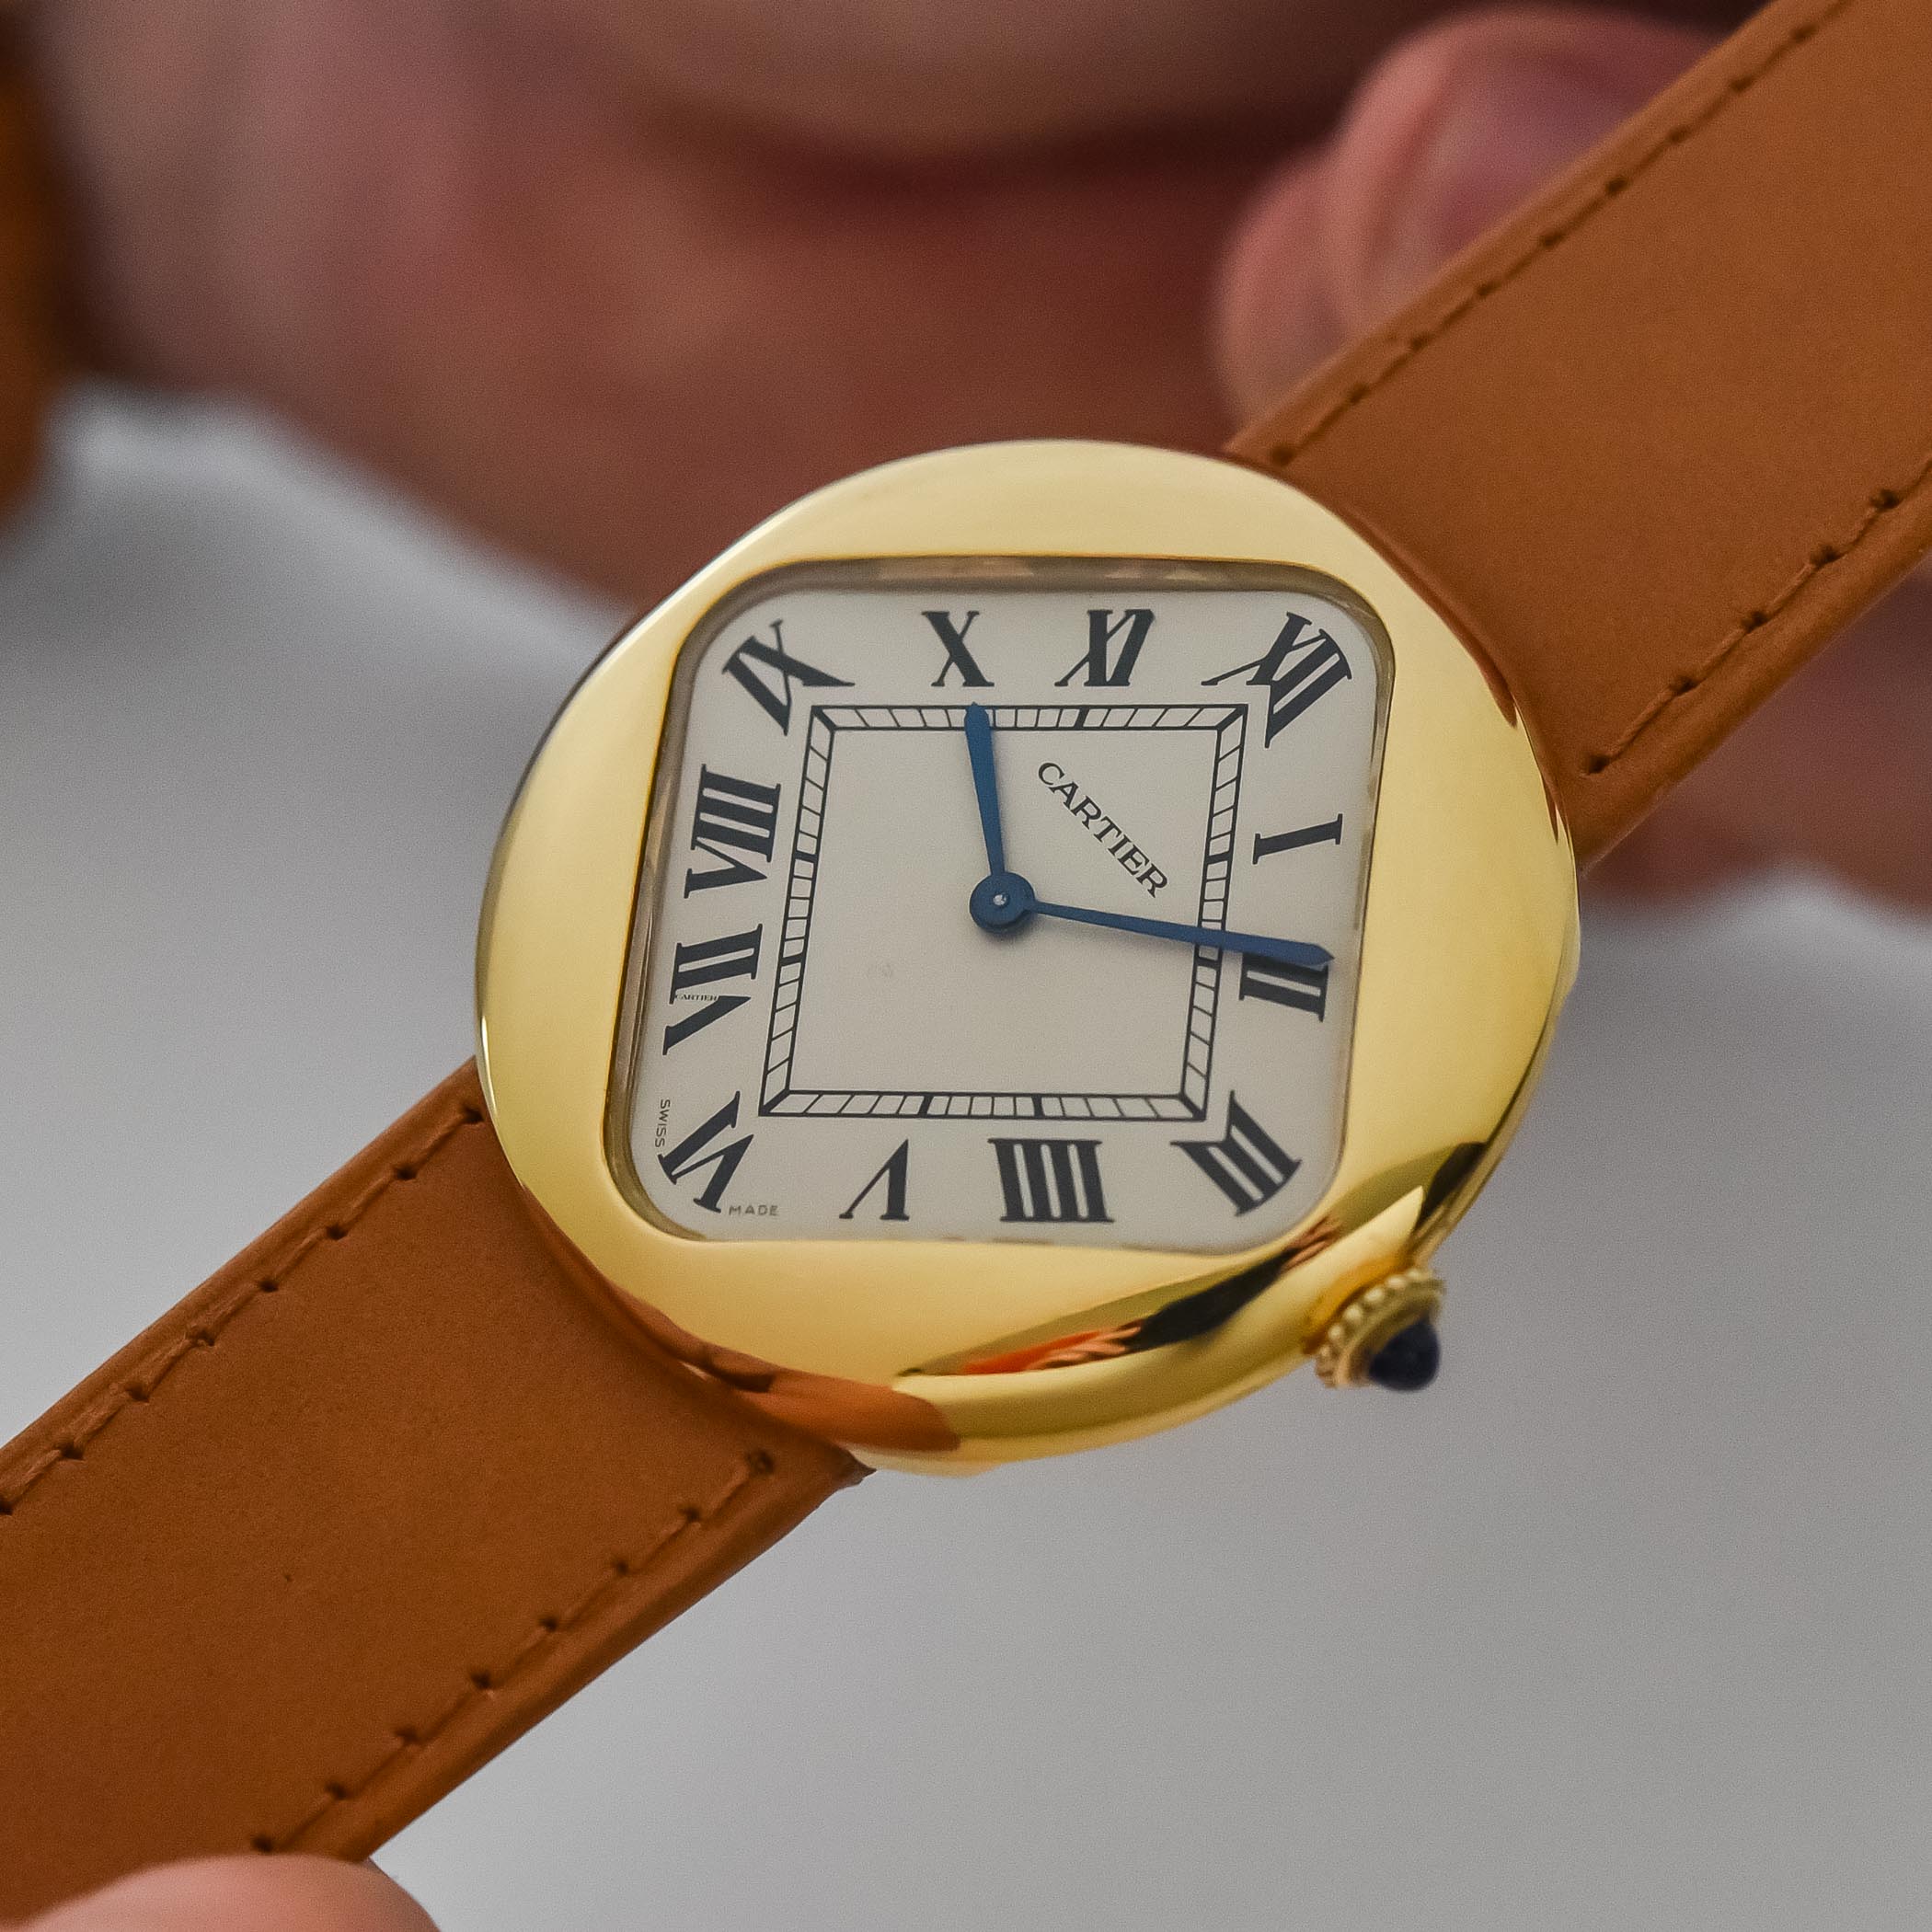 Cartier Pebble Watch Re-Edition